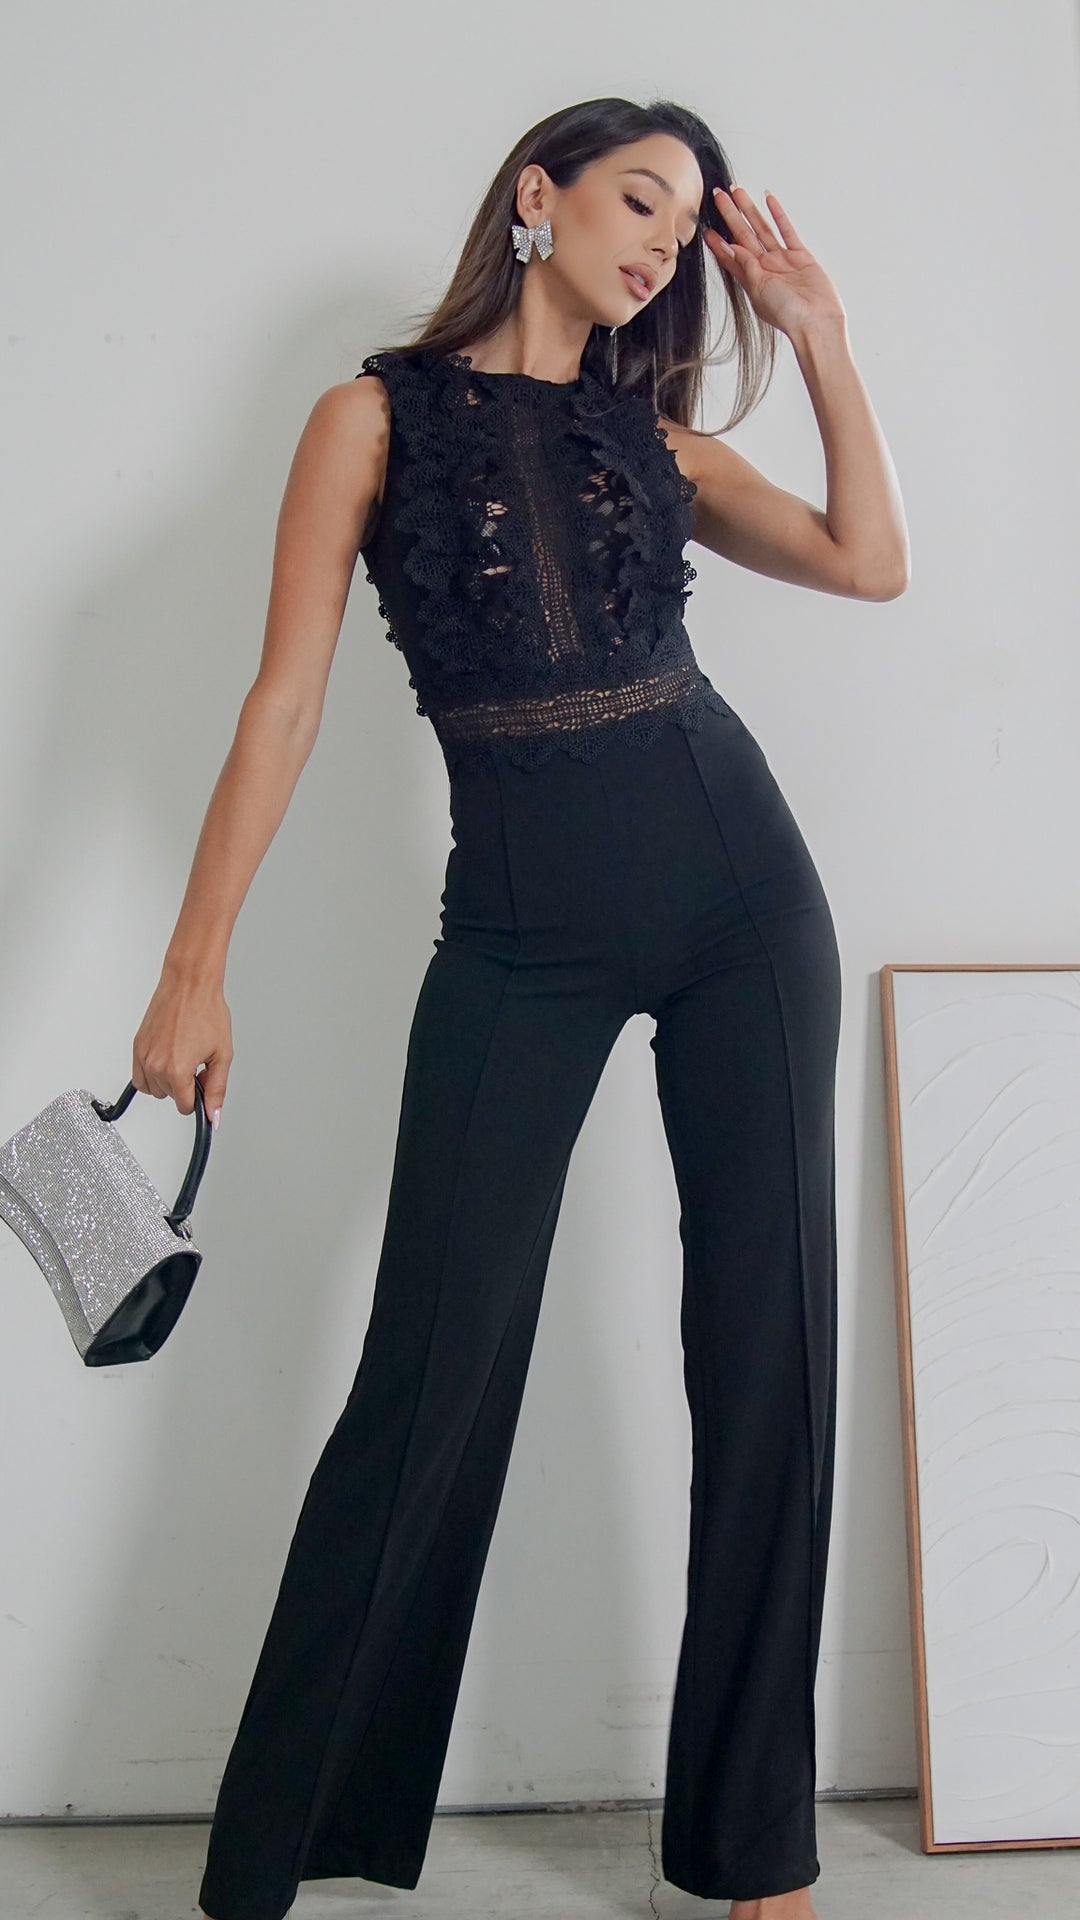 Renzi Lace Bodysuit in Black - Steps New York